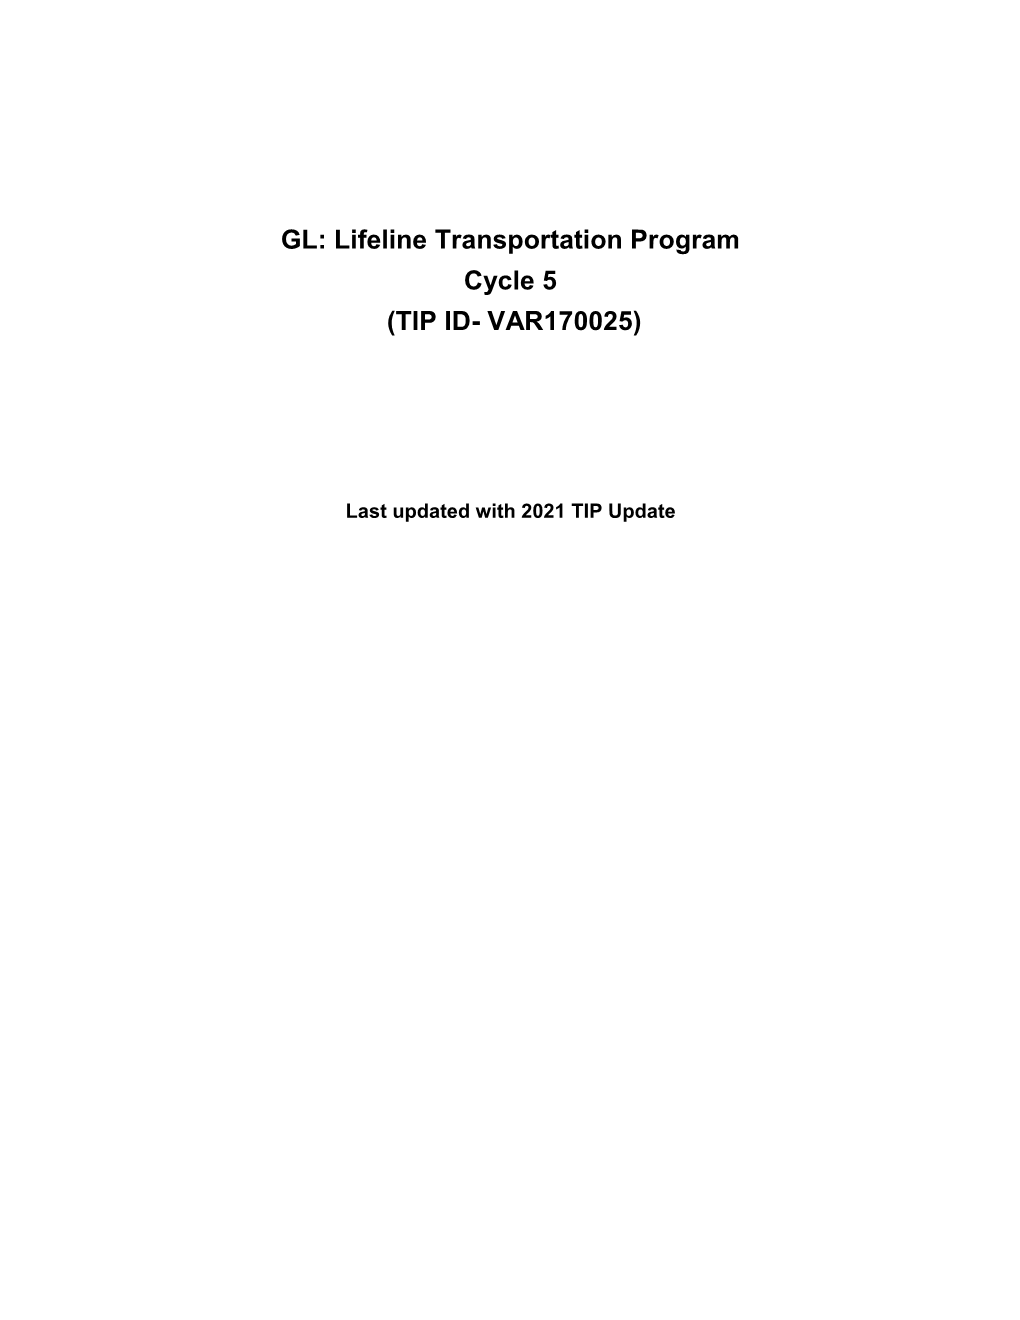 GL: Lifeline Transportation Program Cycle 5 (TIP ID- VAR170025)